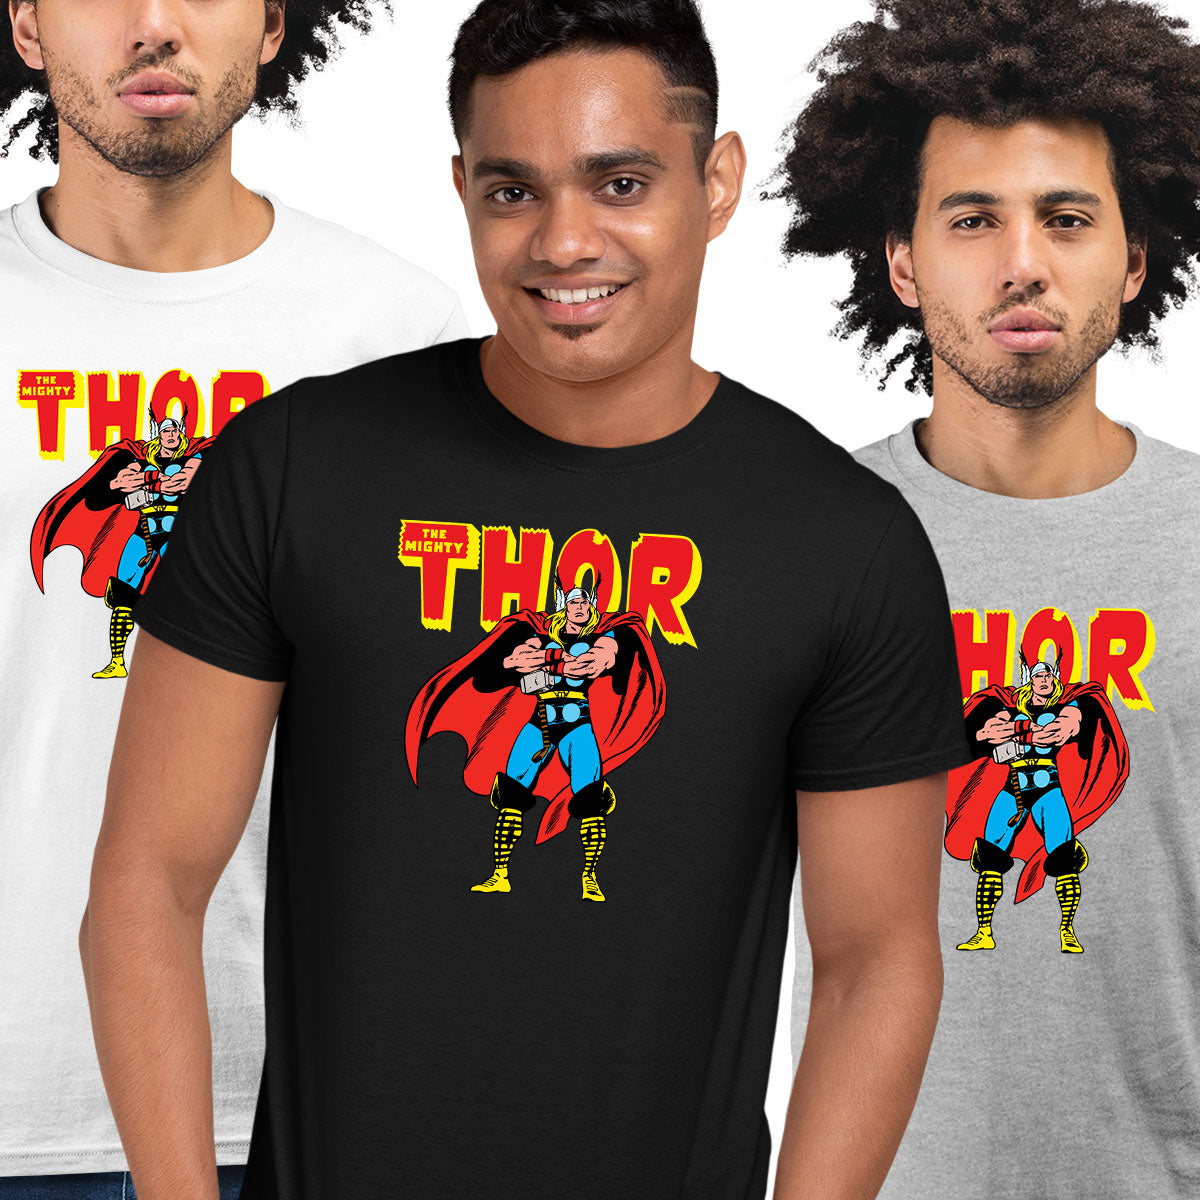 The Mighty Thor t-shirt Nostalgia avenger book